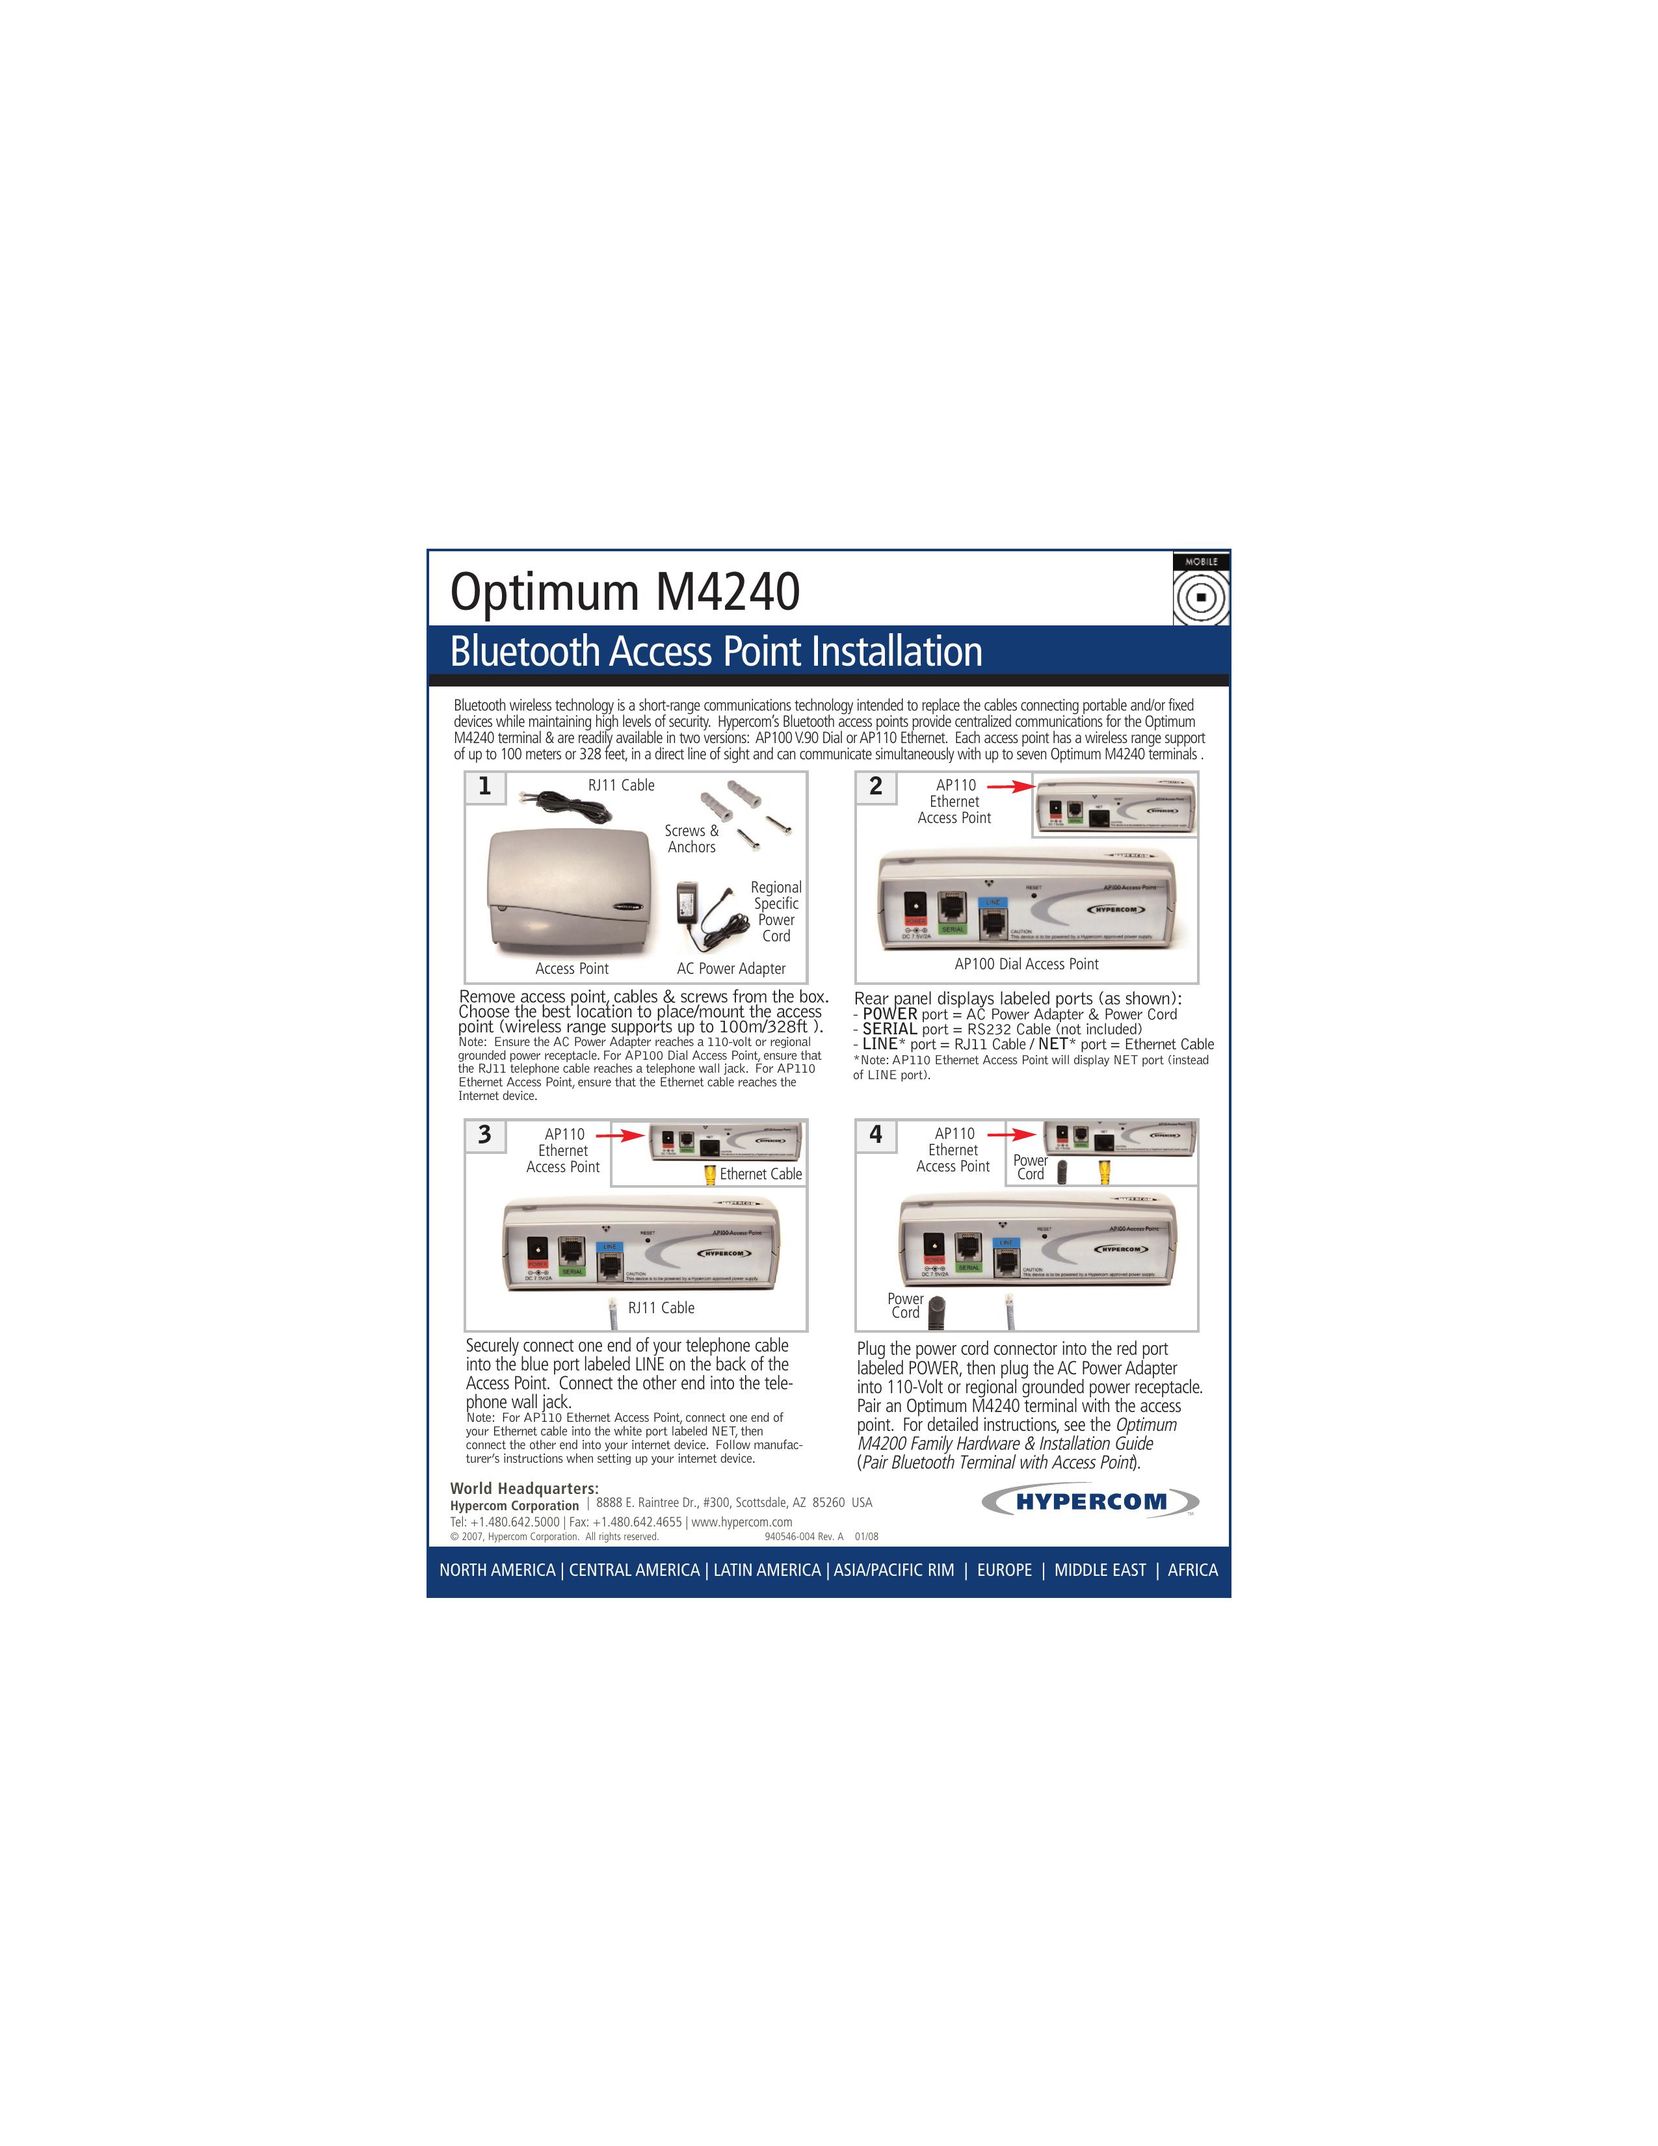 Hypercom M4200 Network Router User Manual